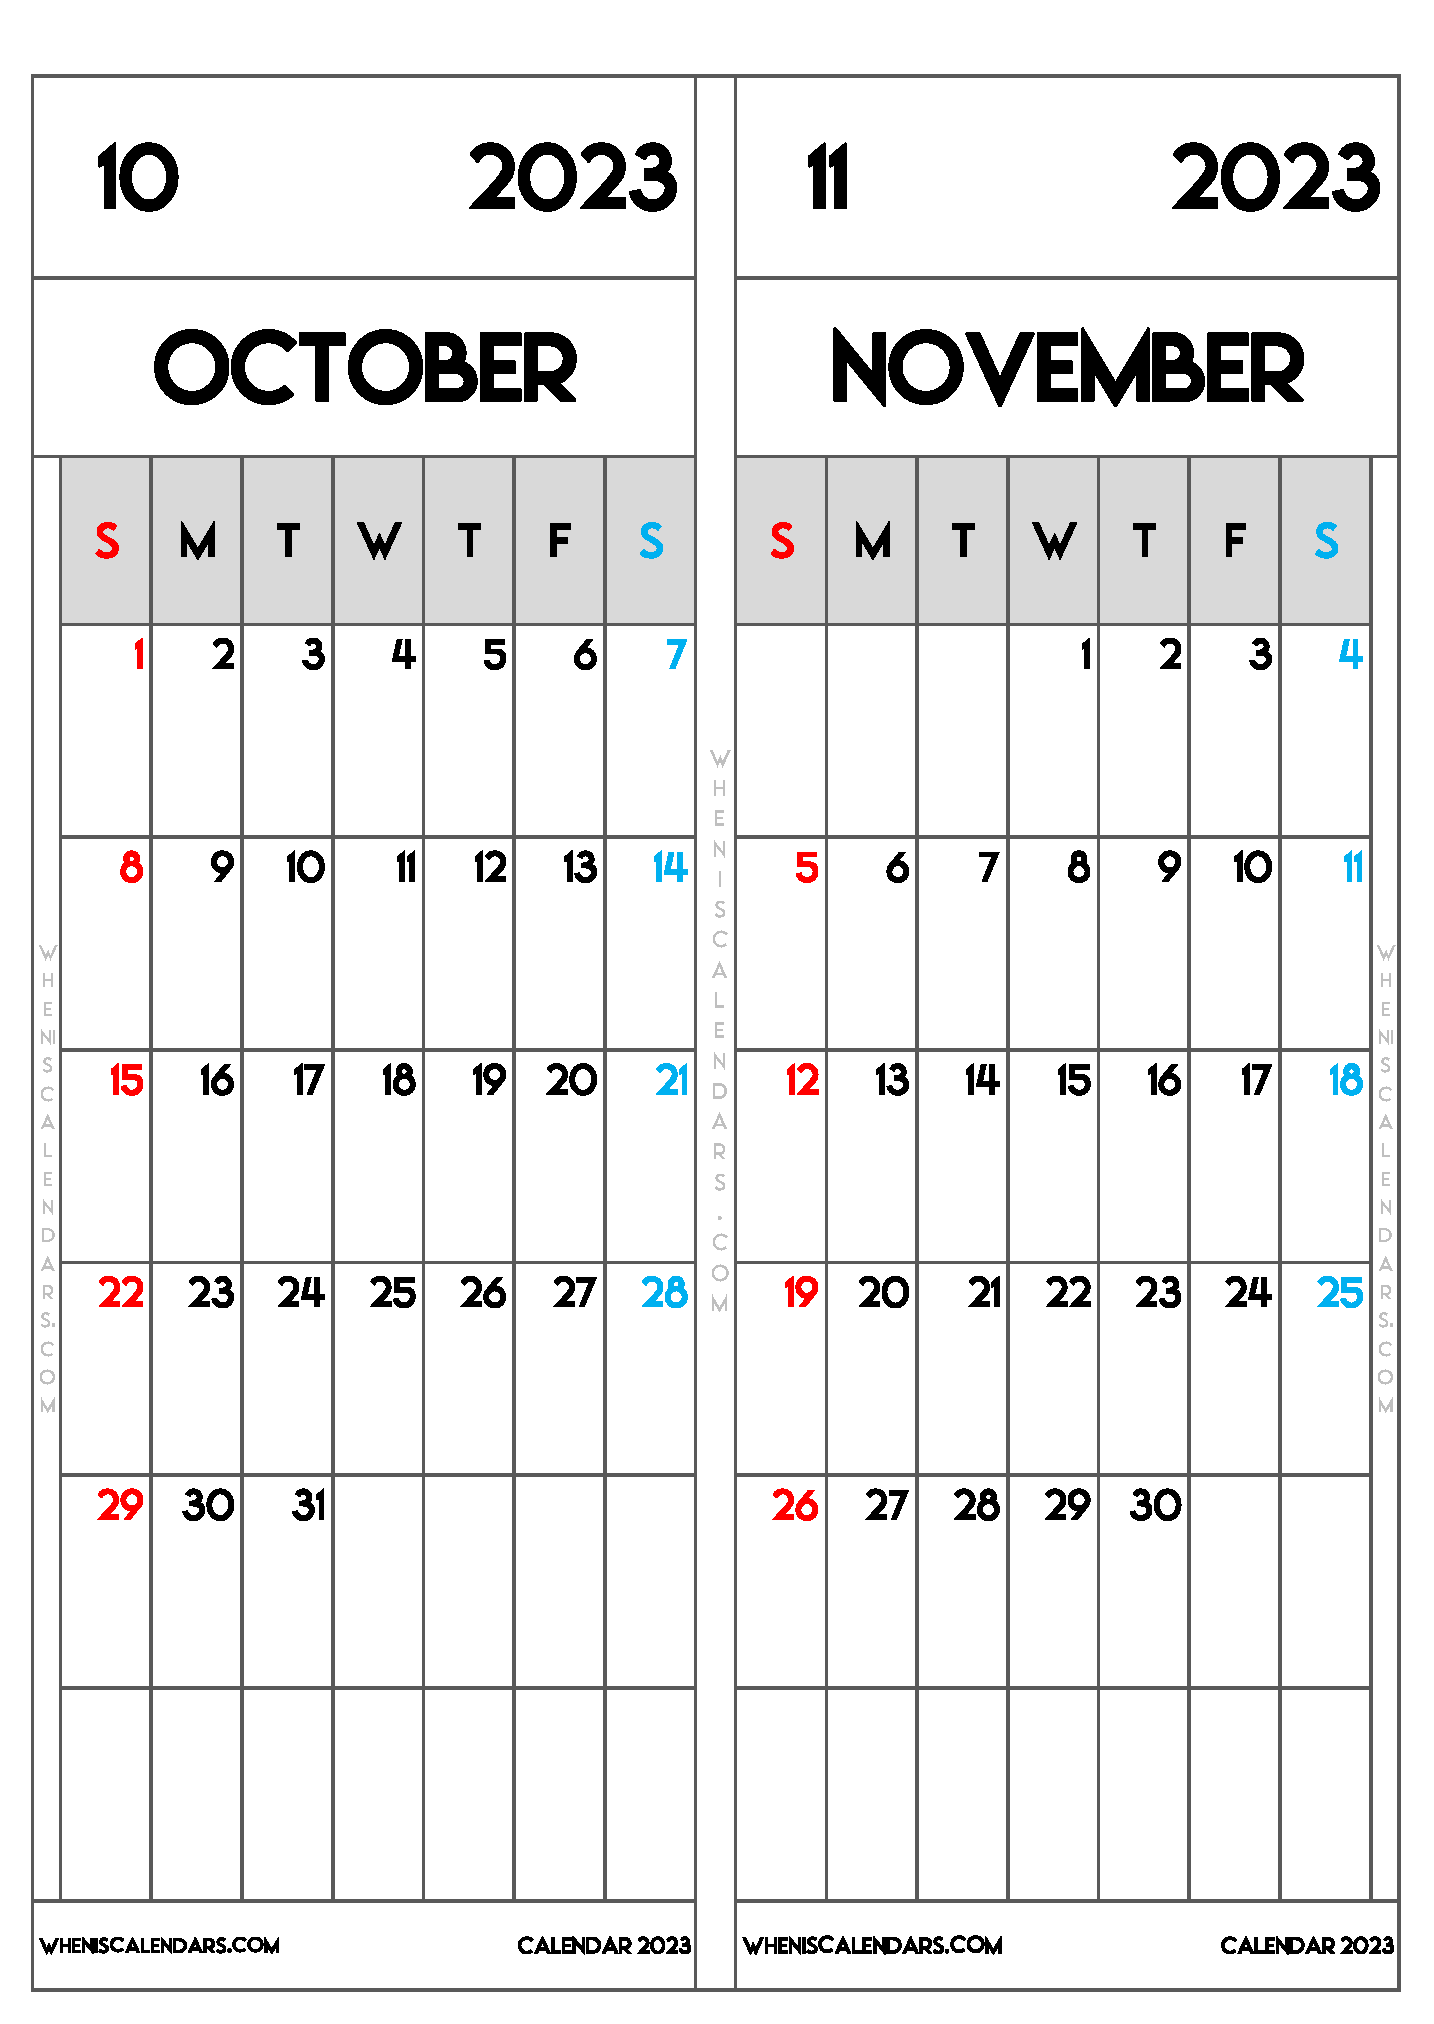 Download Free Printable October November 2023 Calendar as PDF and PNG Image